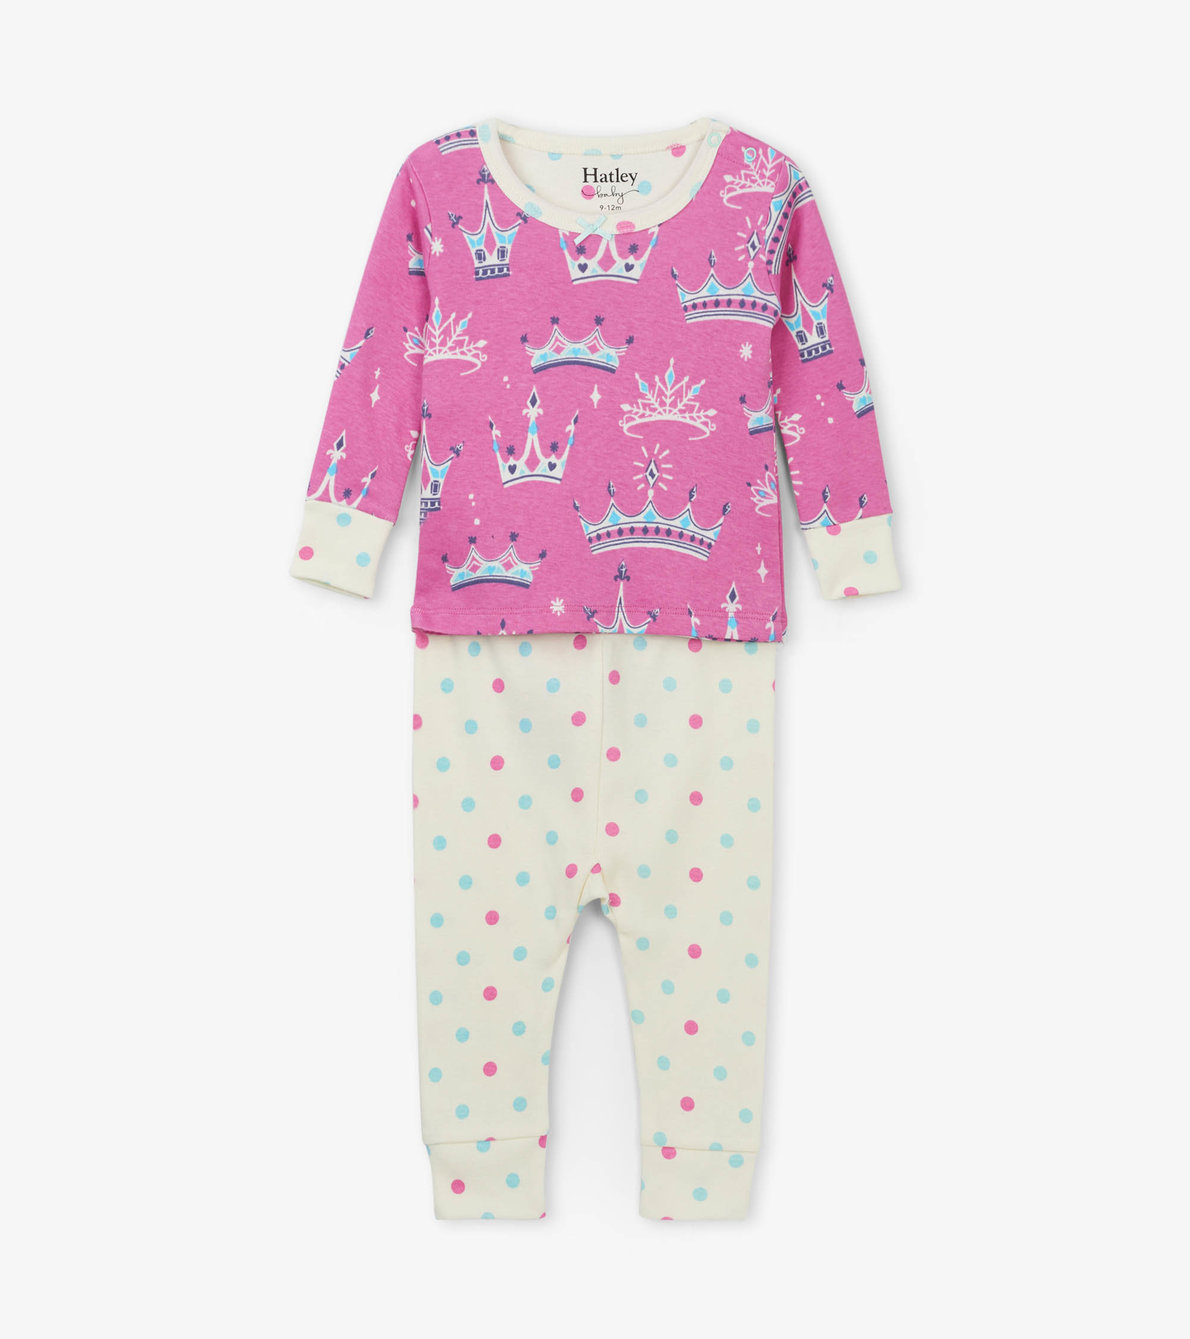 View larger image of Pretty Princess Organic Cotton Baby Pajama Set